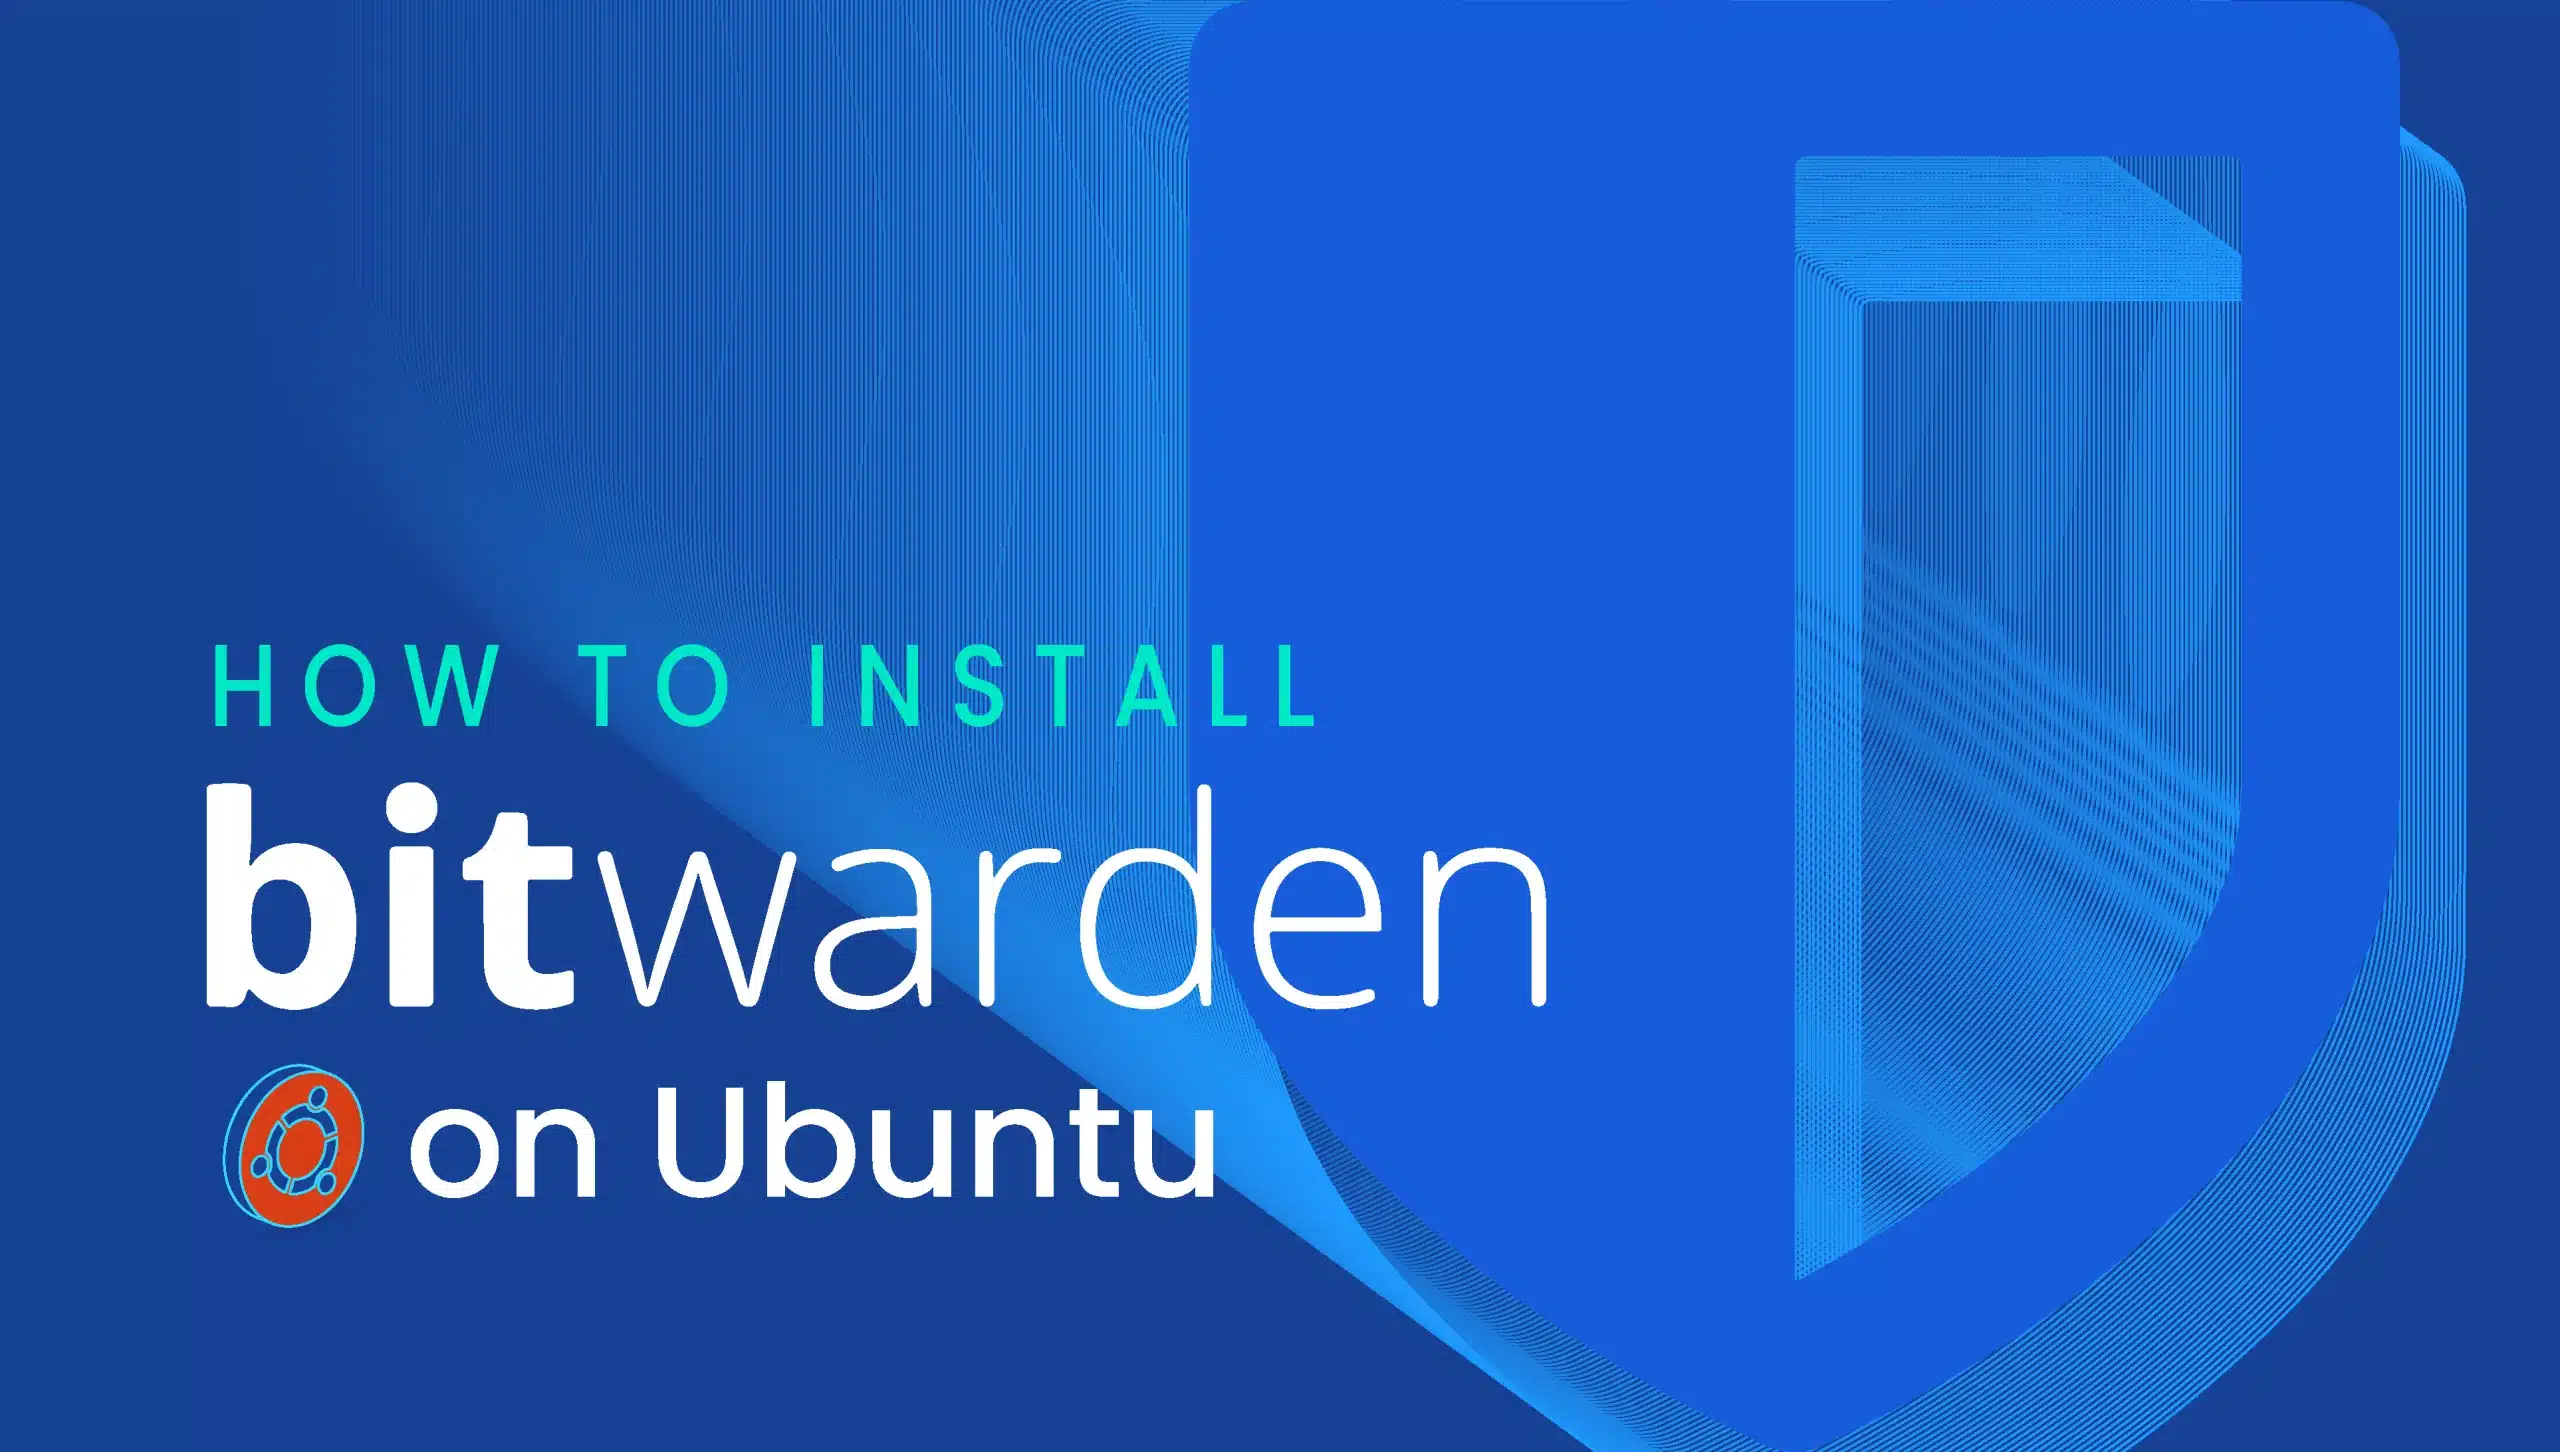 How to install Bitwarden on Ubuntu